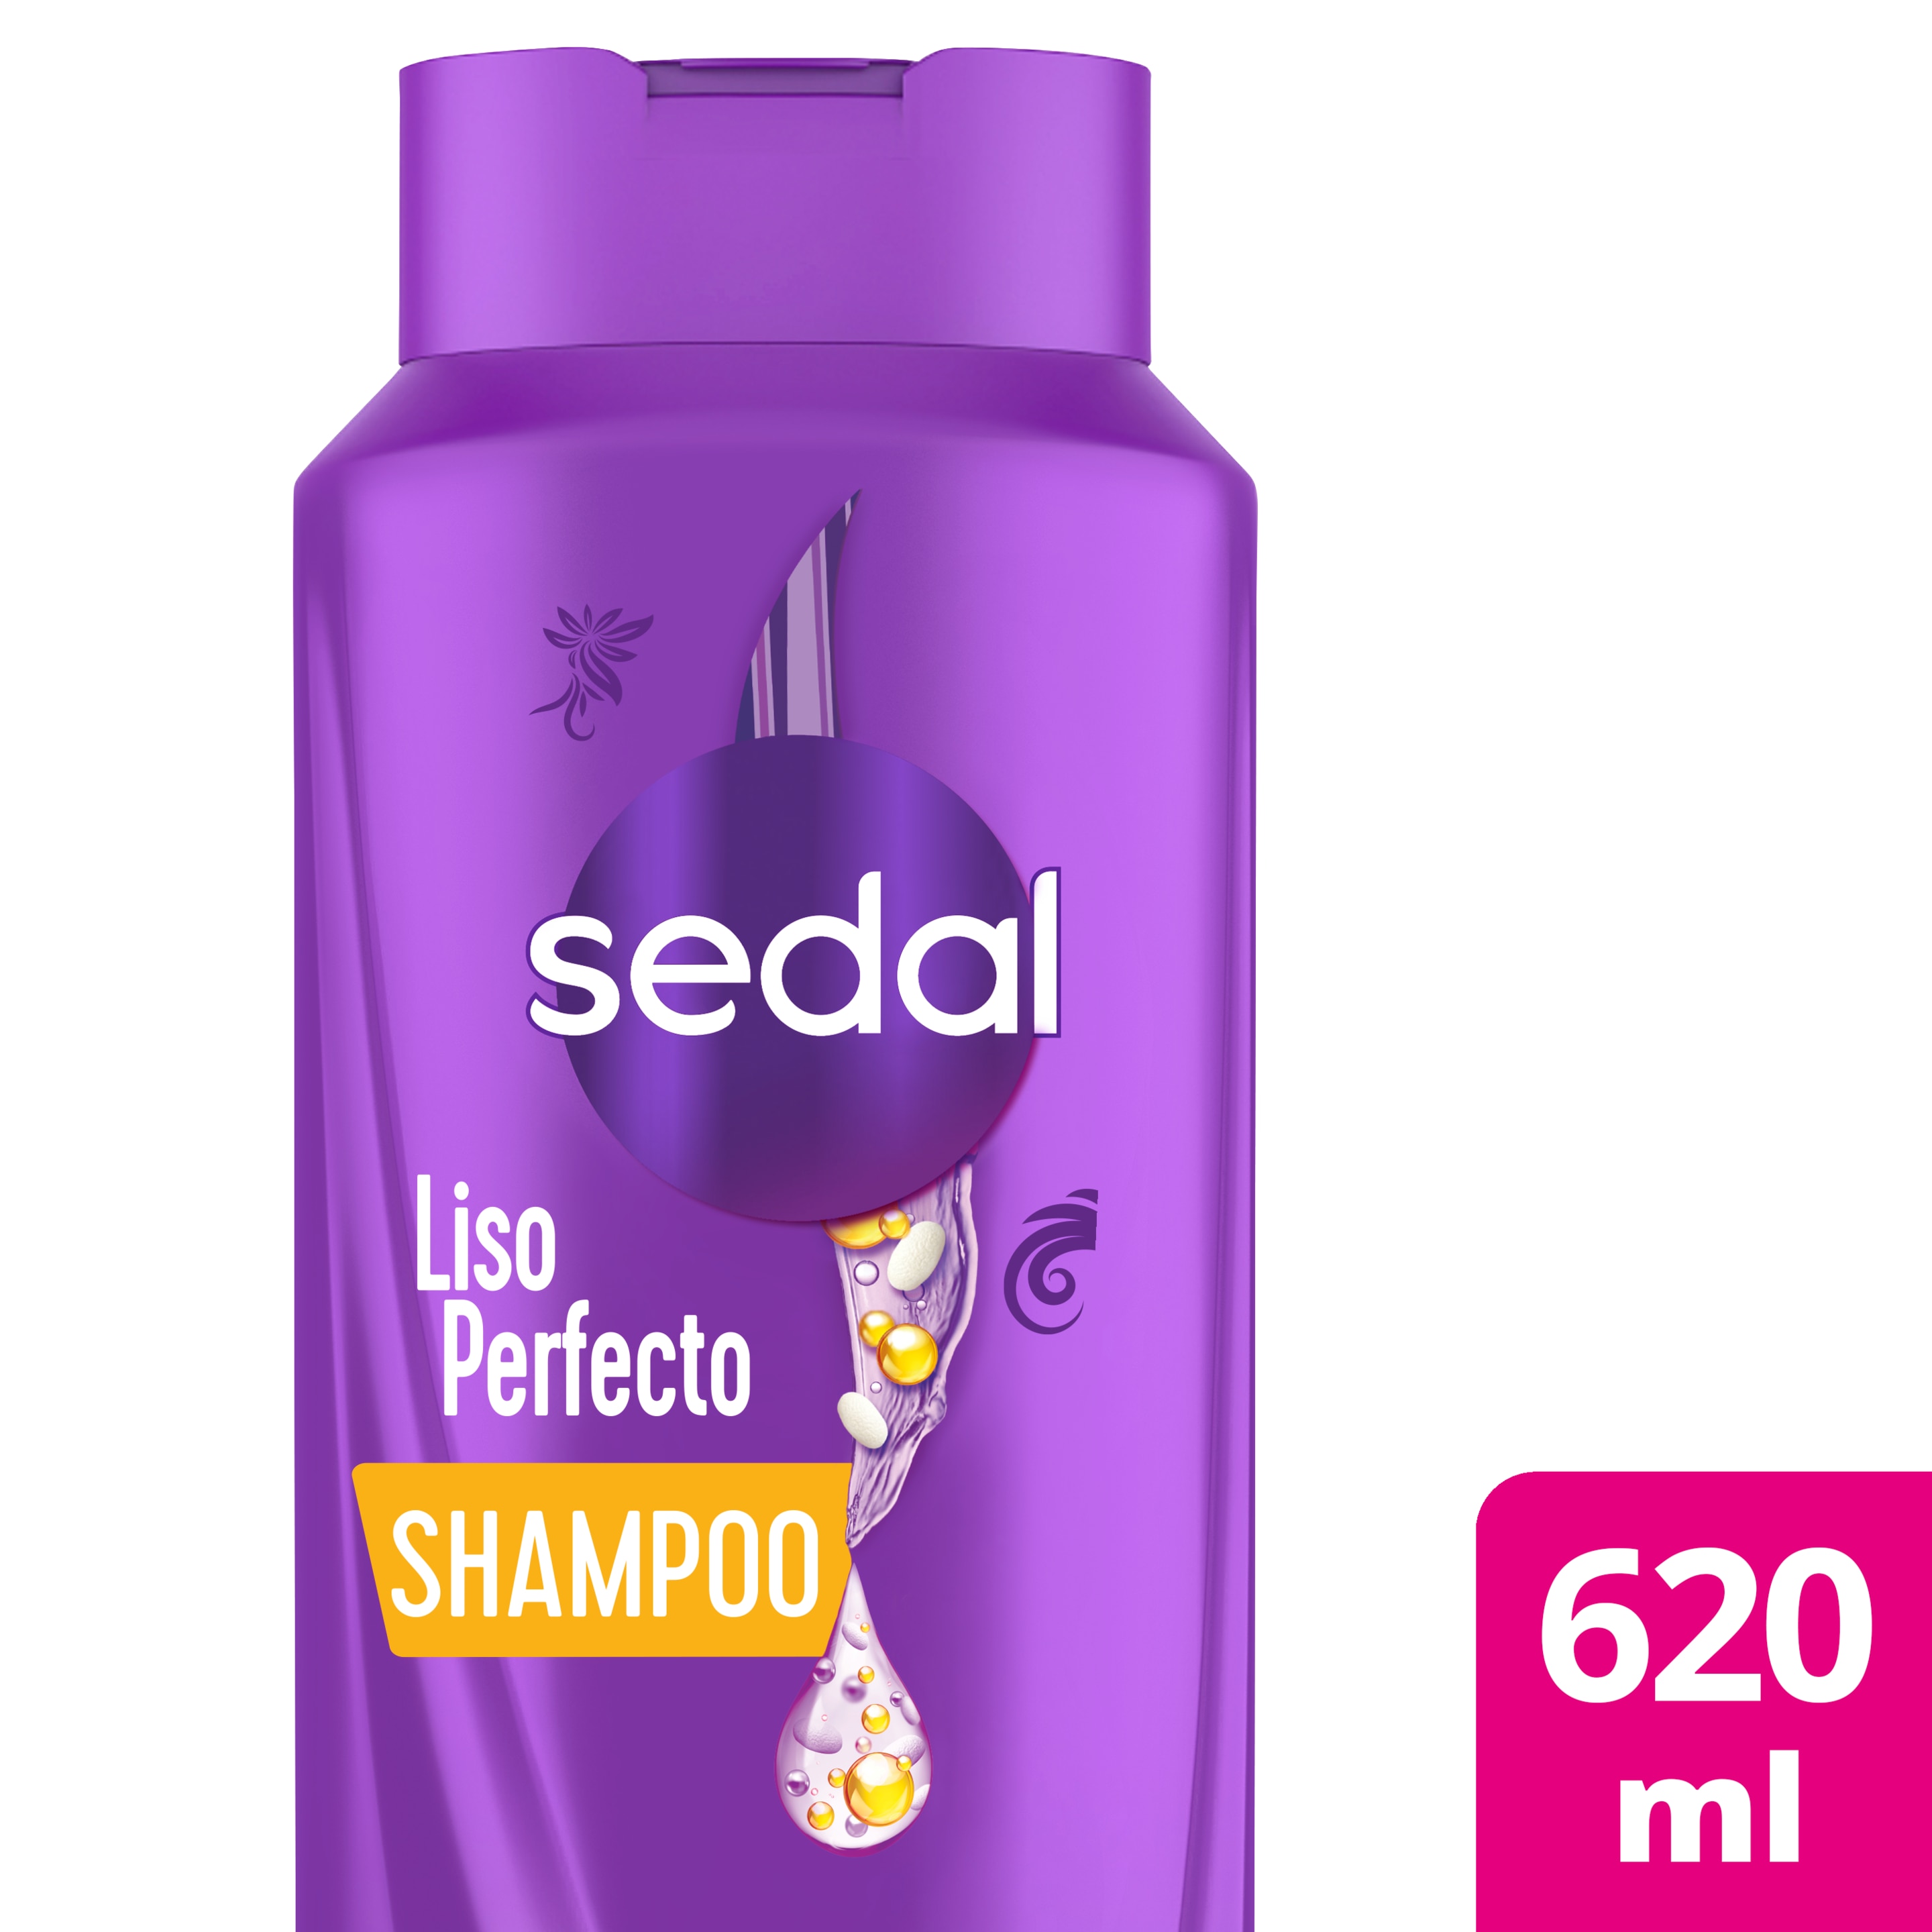 Shampoo Sedal Liso perfecto  620ml